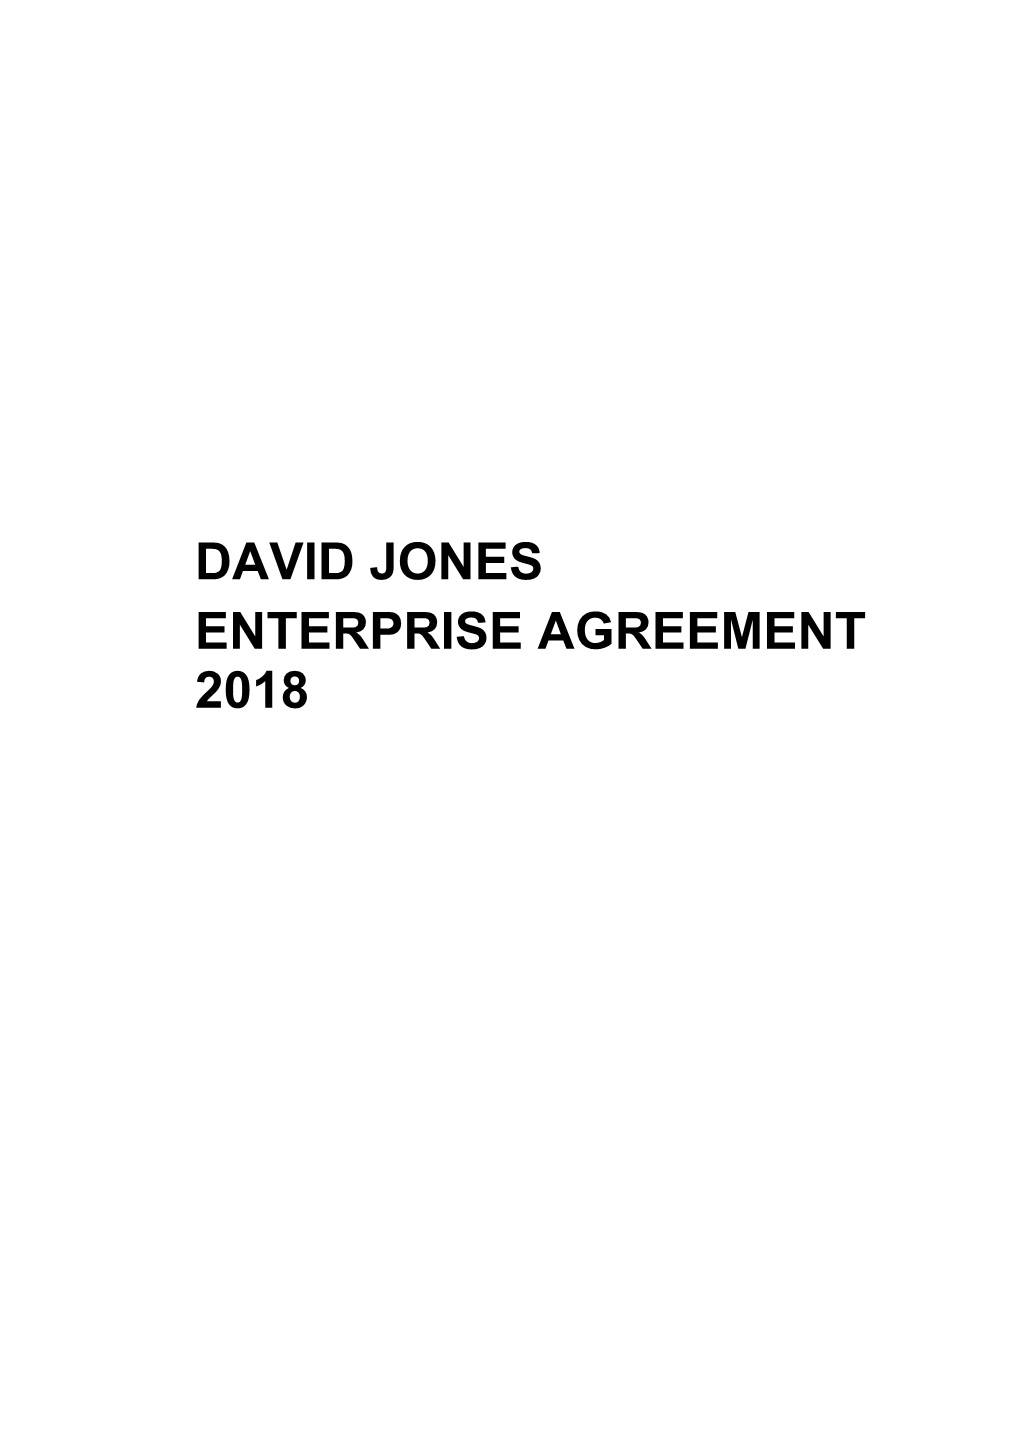 David Jones Enterprise Agreement 2018